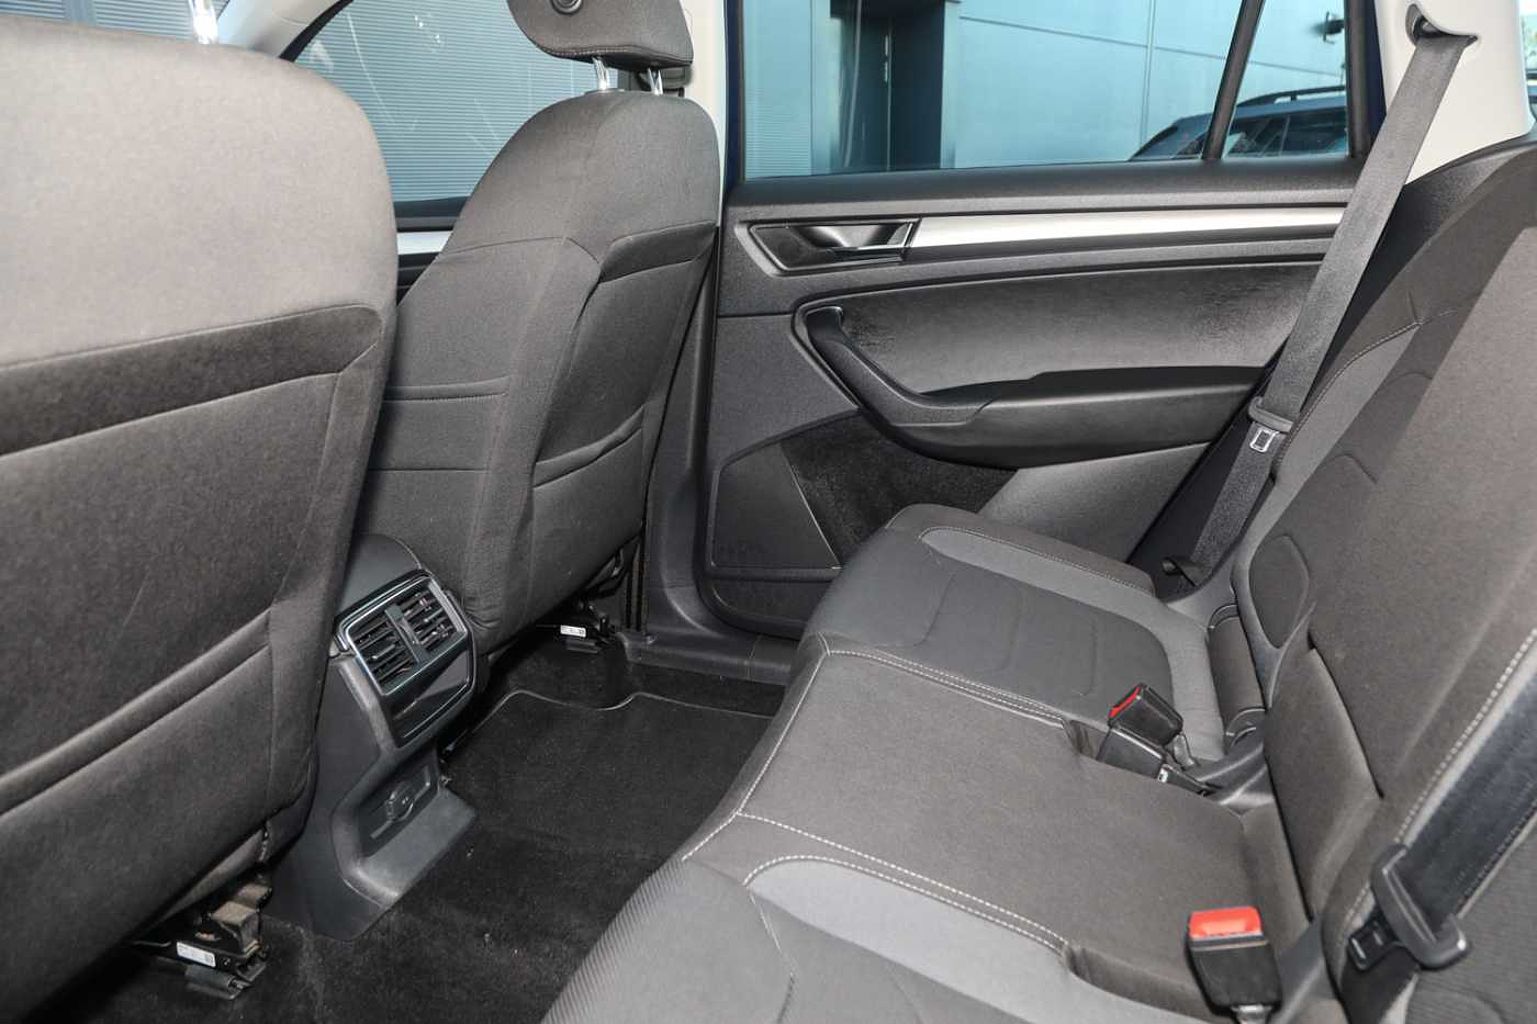 SKODA Kodiaq 1.4 TSI (125ps) SE (5 Seats) SUV